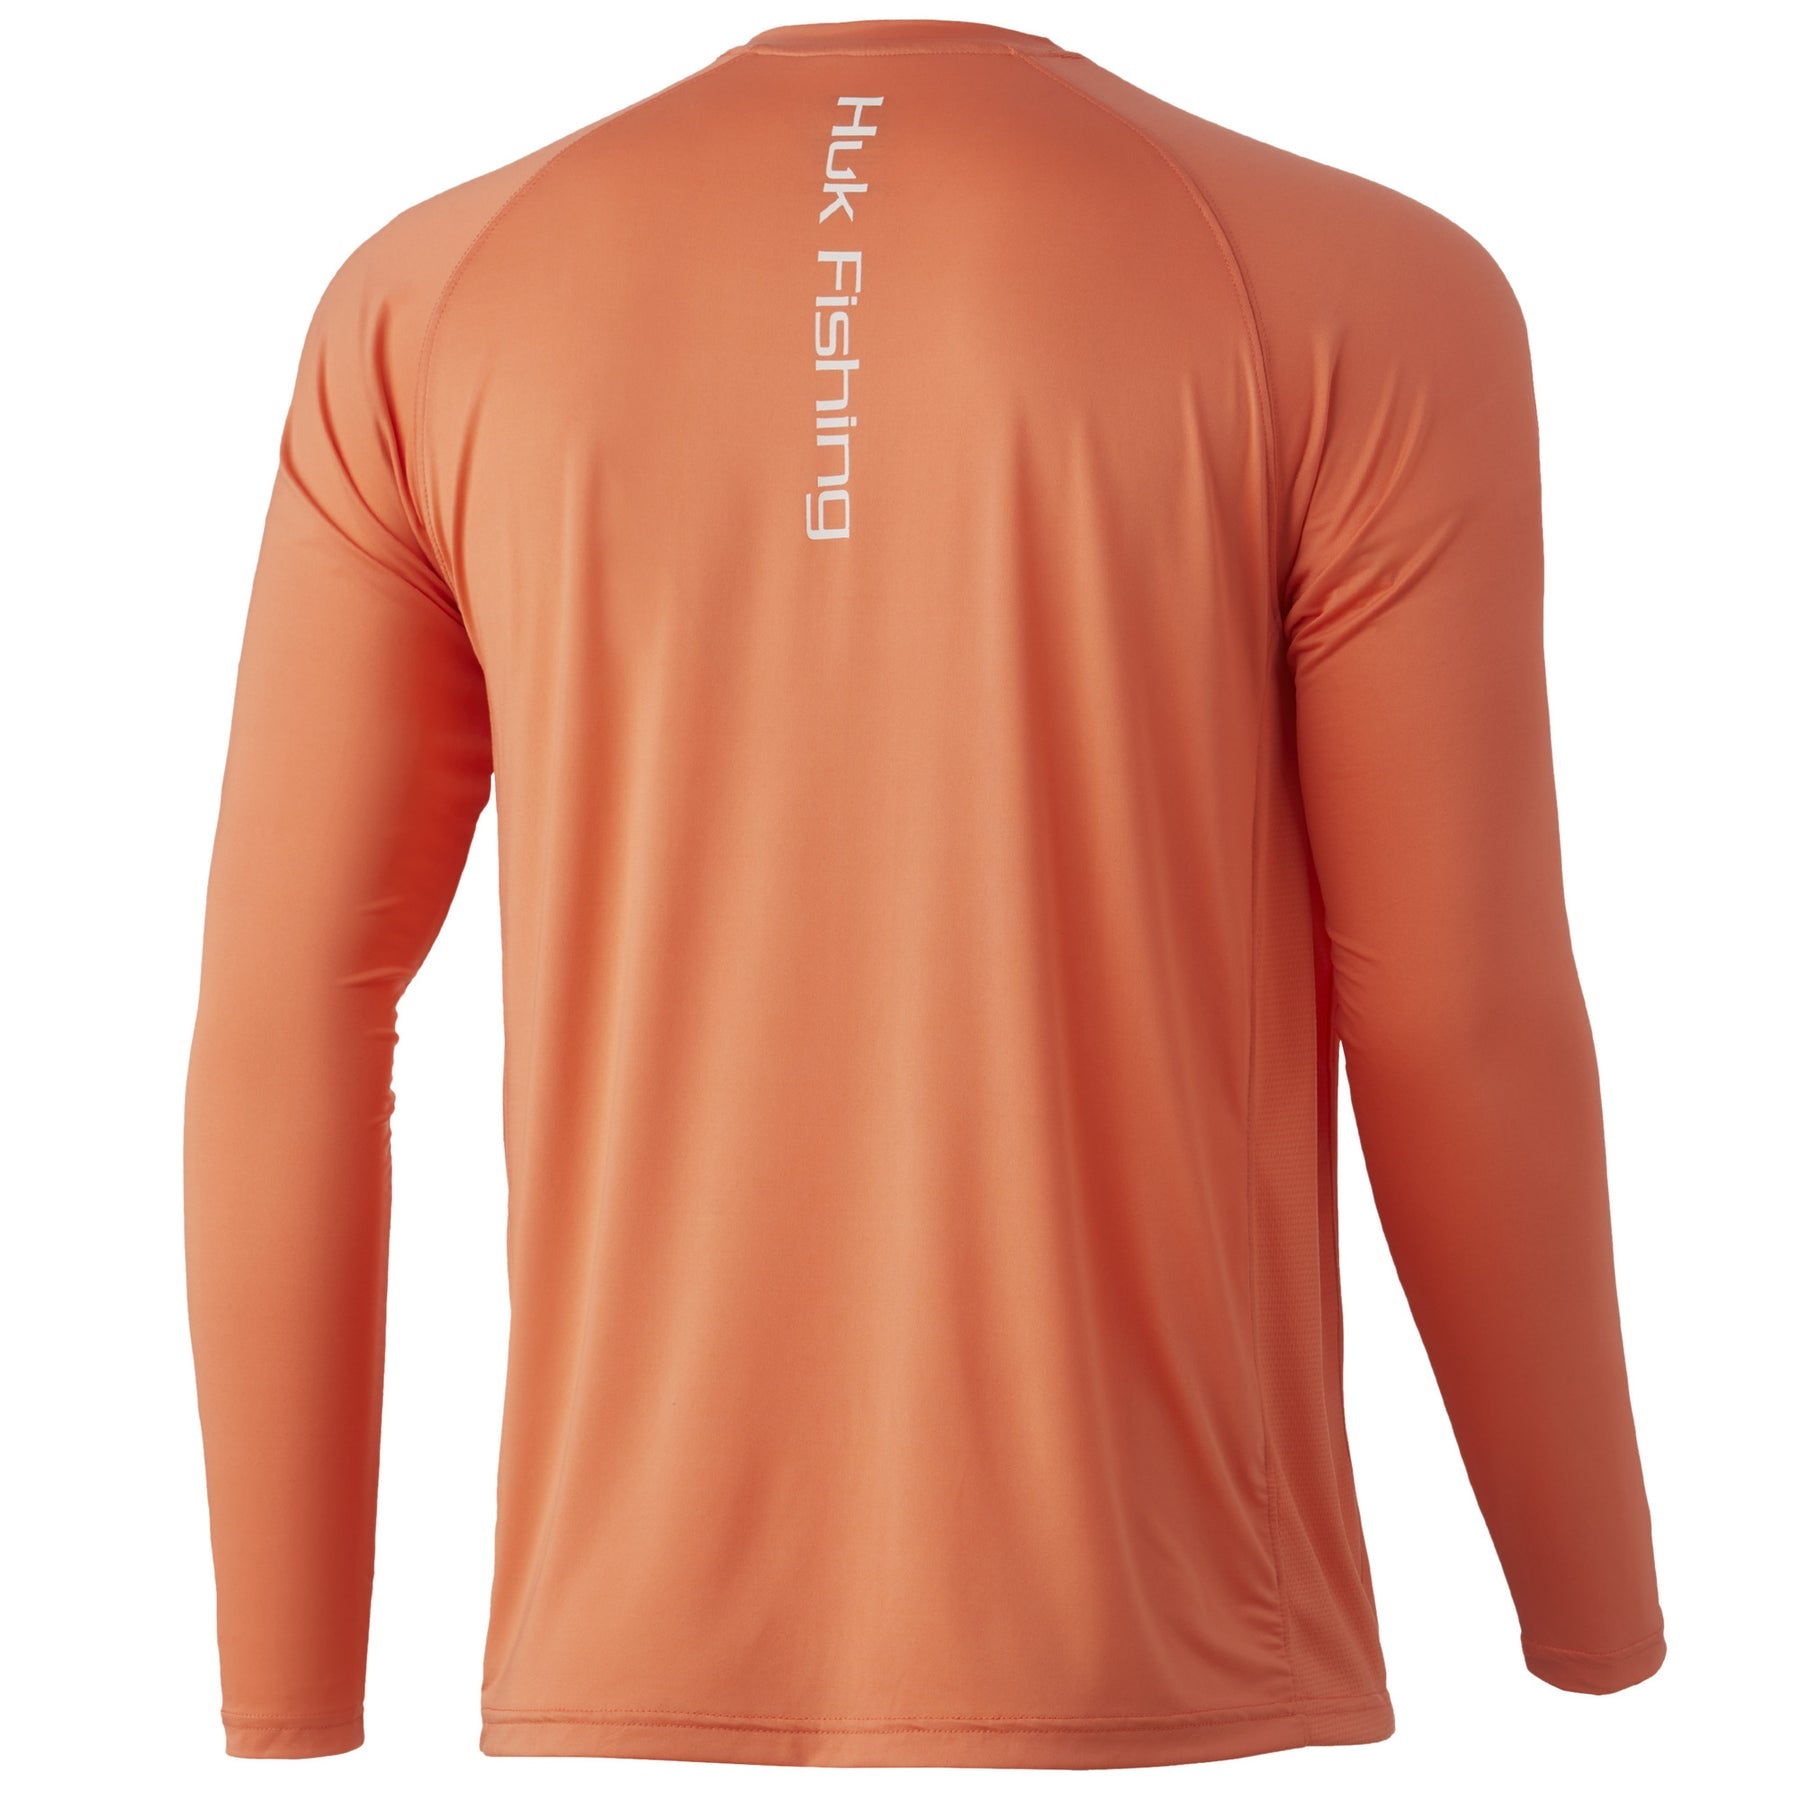 HUK Men's Pursuit Crew Long Sleeve, Sun Protecting Fishing Shirt Size XL 